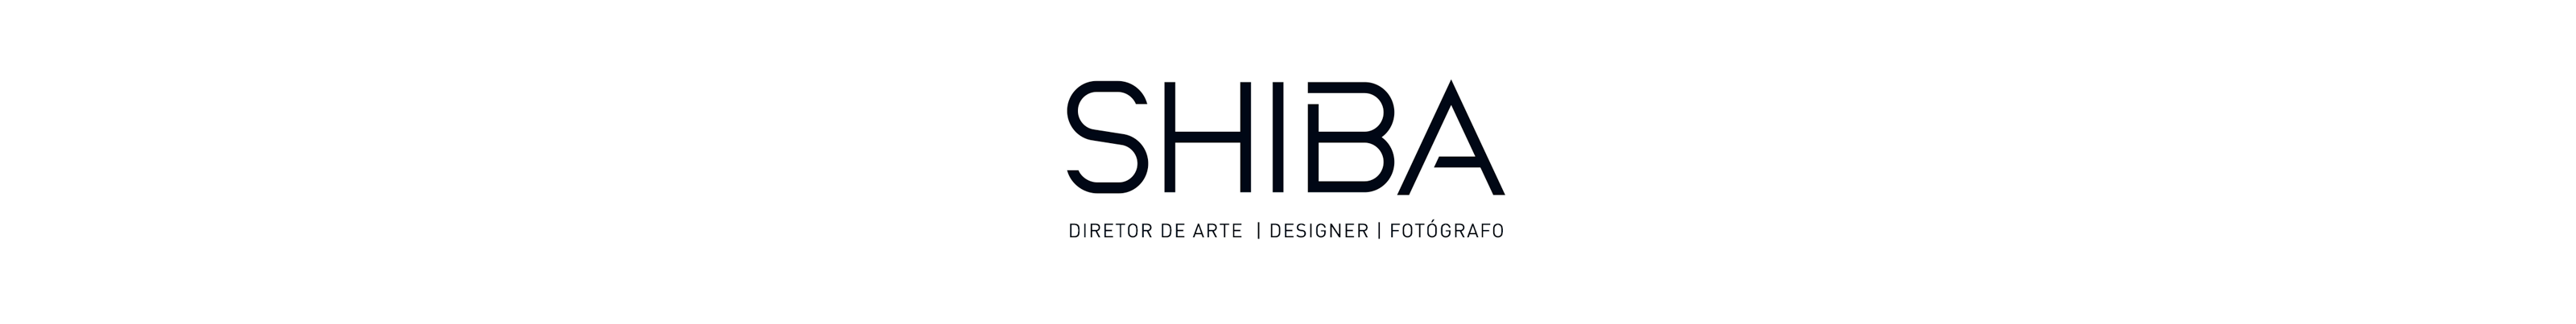 Tiago Ishibashi's profile banner